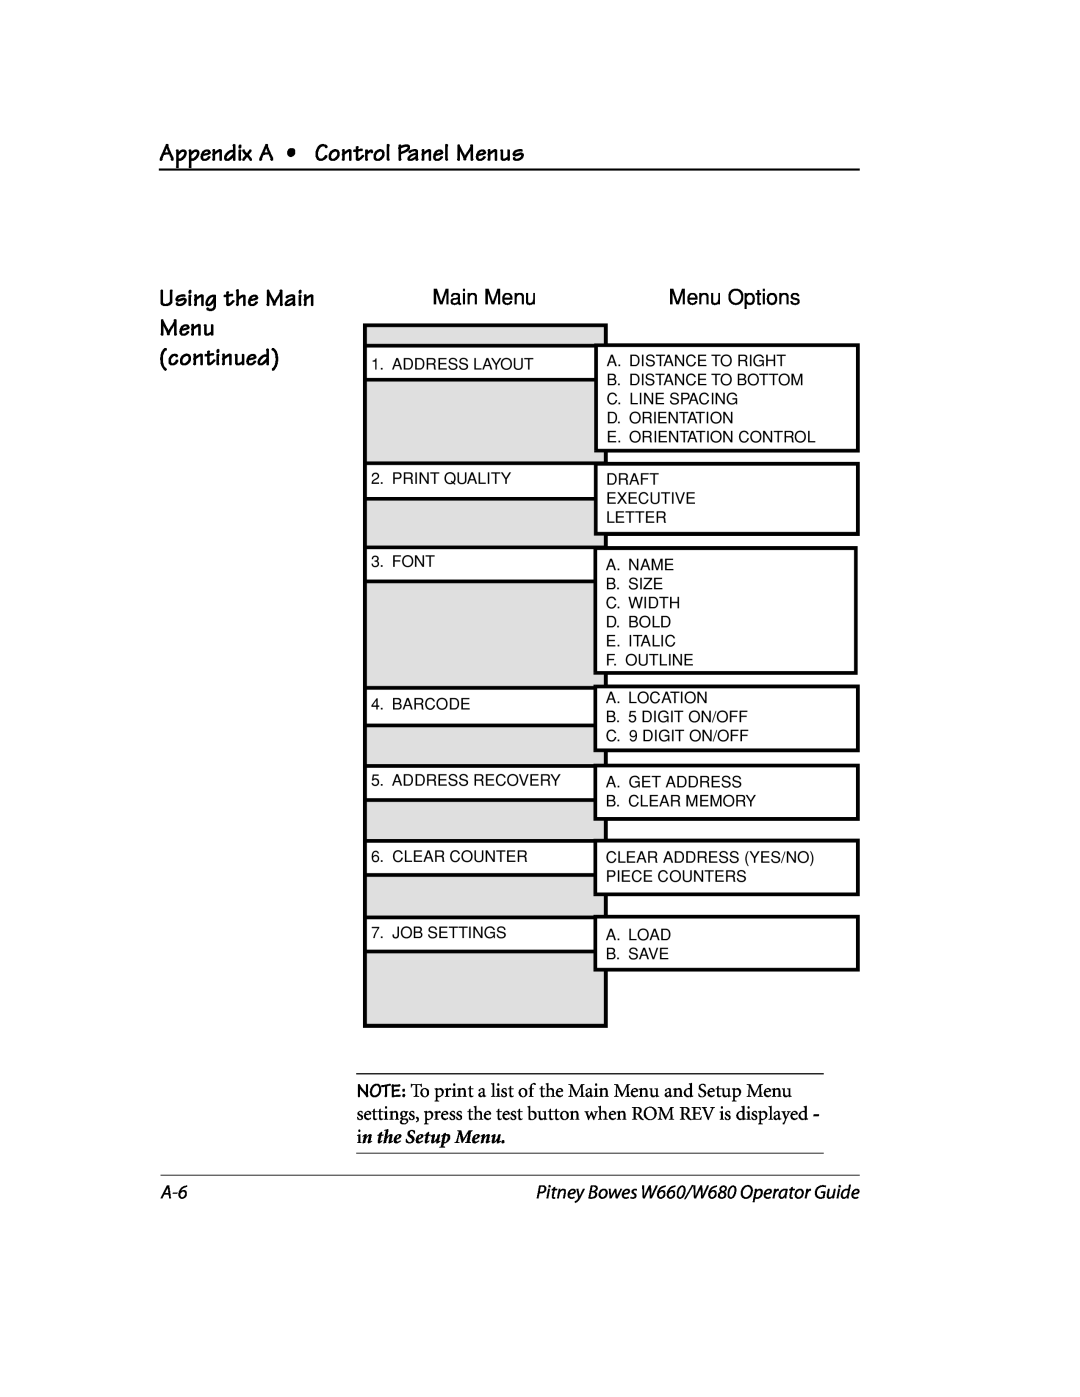 Pitney Bowes W660, W680 manual continued, Appendix A Control Panel Menus, Using the Main Menu, Menu Options 